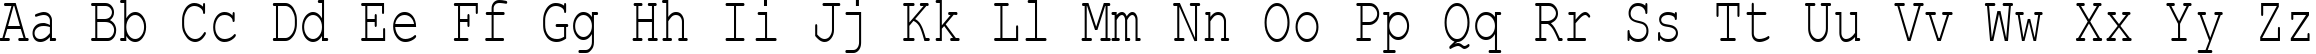 Пример написания английского алфавита шрифтом Courier New Cyr_75n